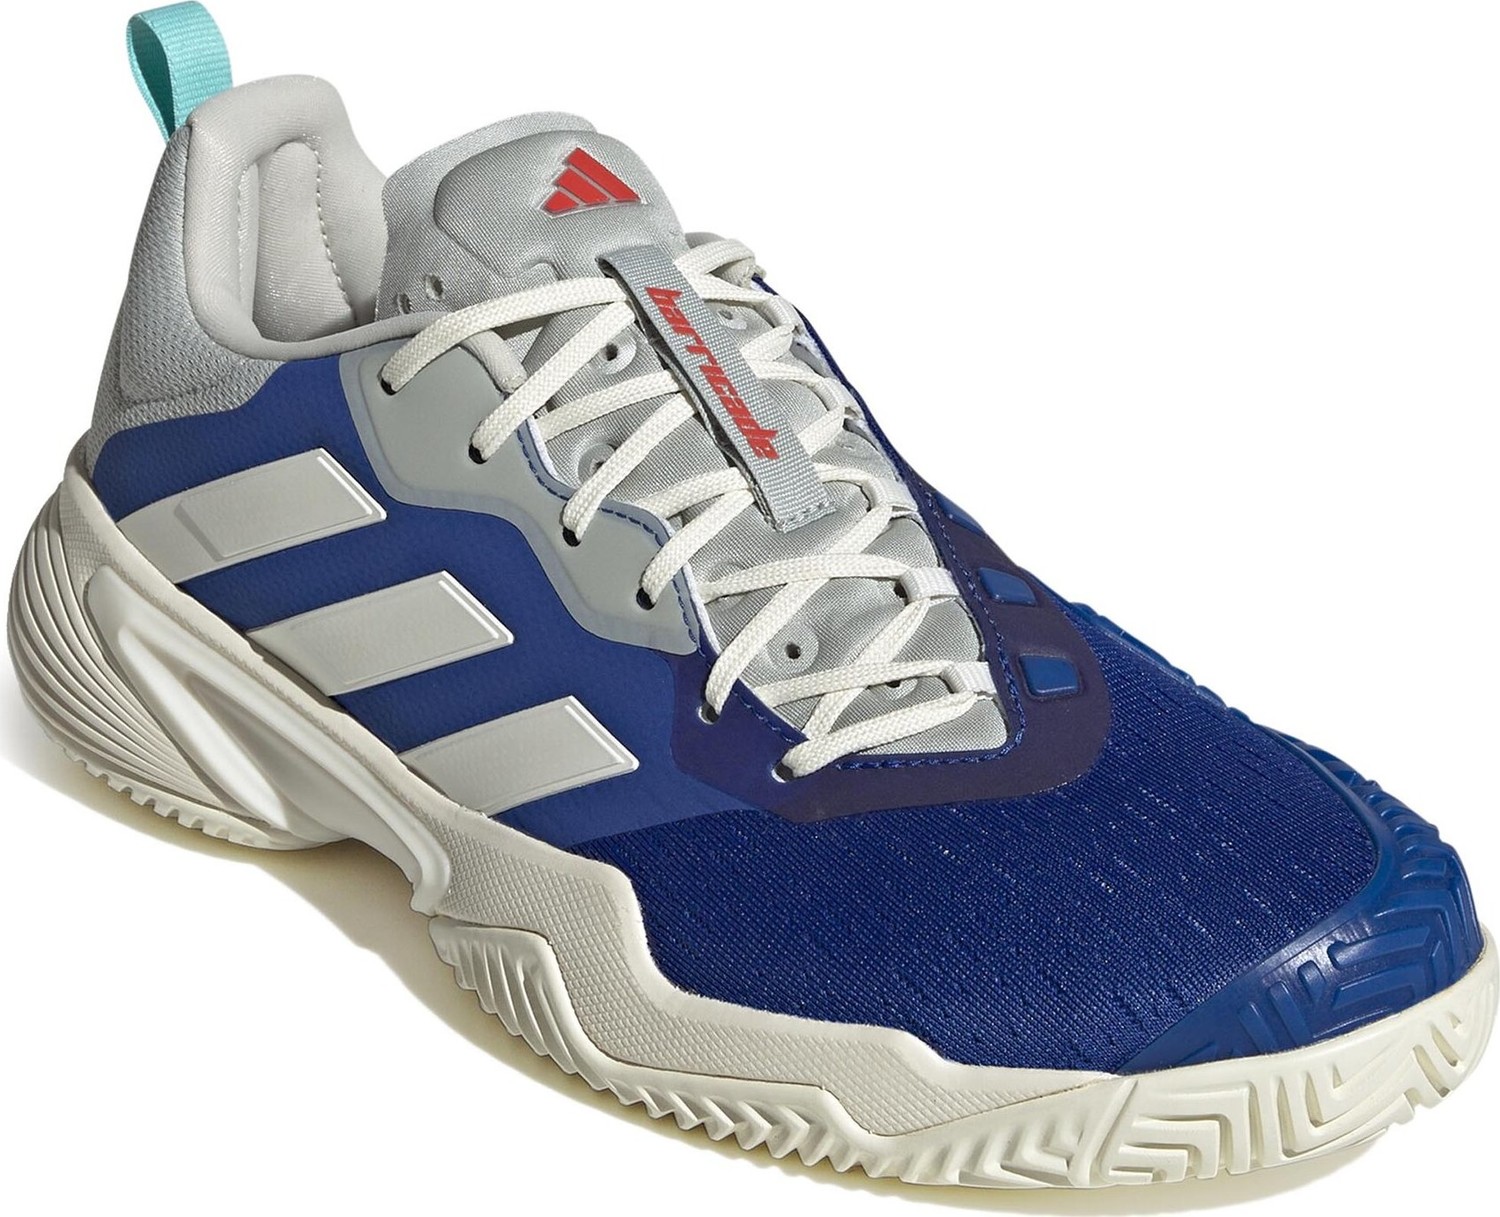 Boty adidas Barricade Tennis Shoes ID1549 Royblu/Owhite/Brired